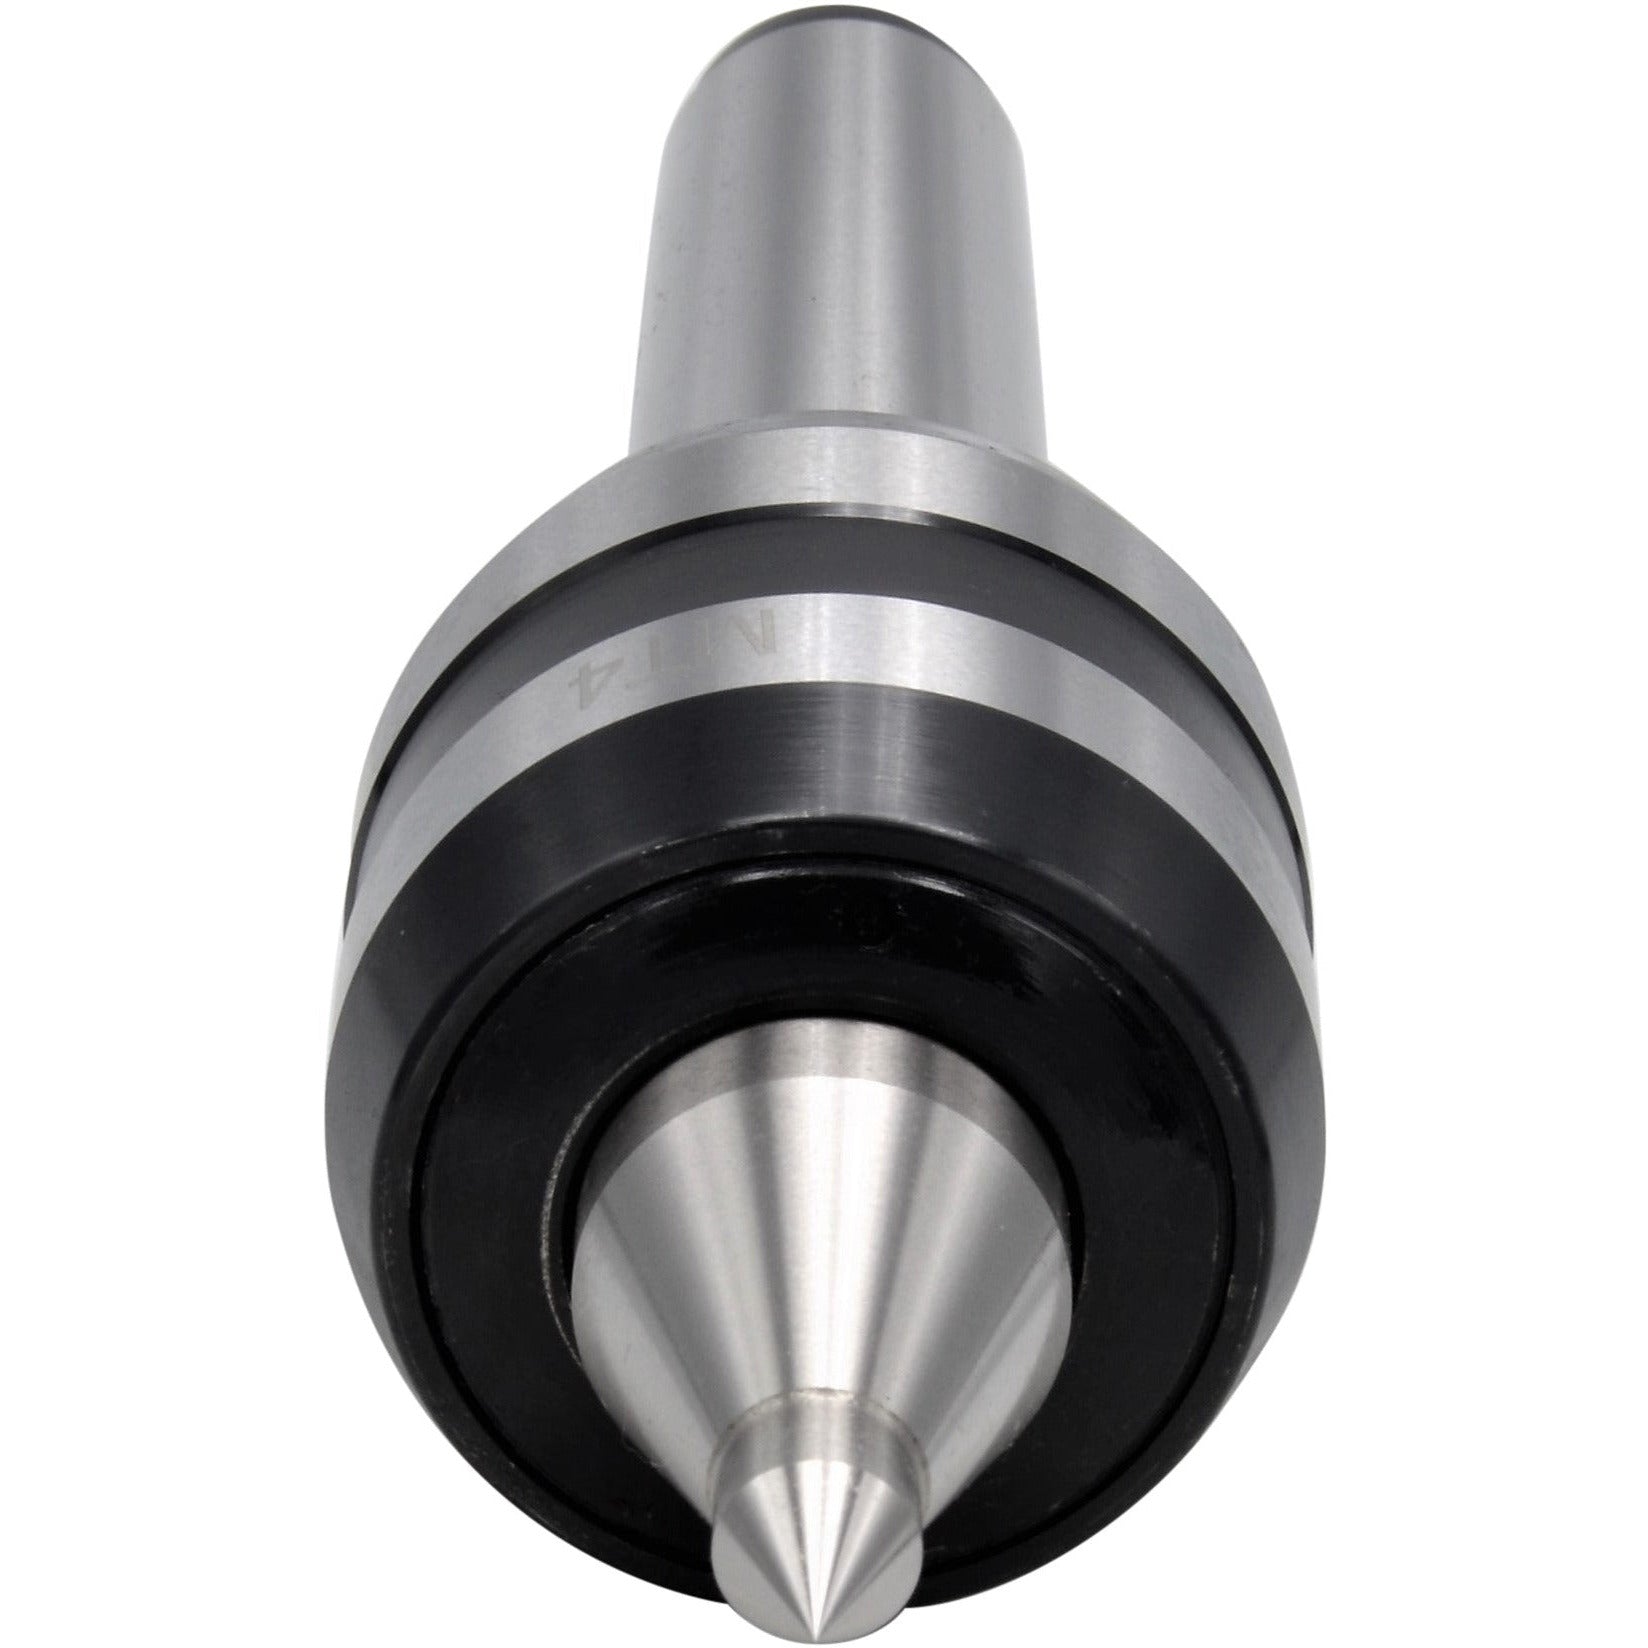 Morse Taper 4 Extended Nose Precision CNC High Speed Live Centre M14 drawbar